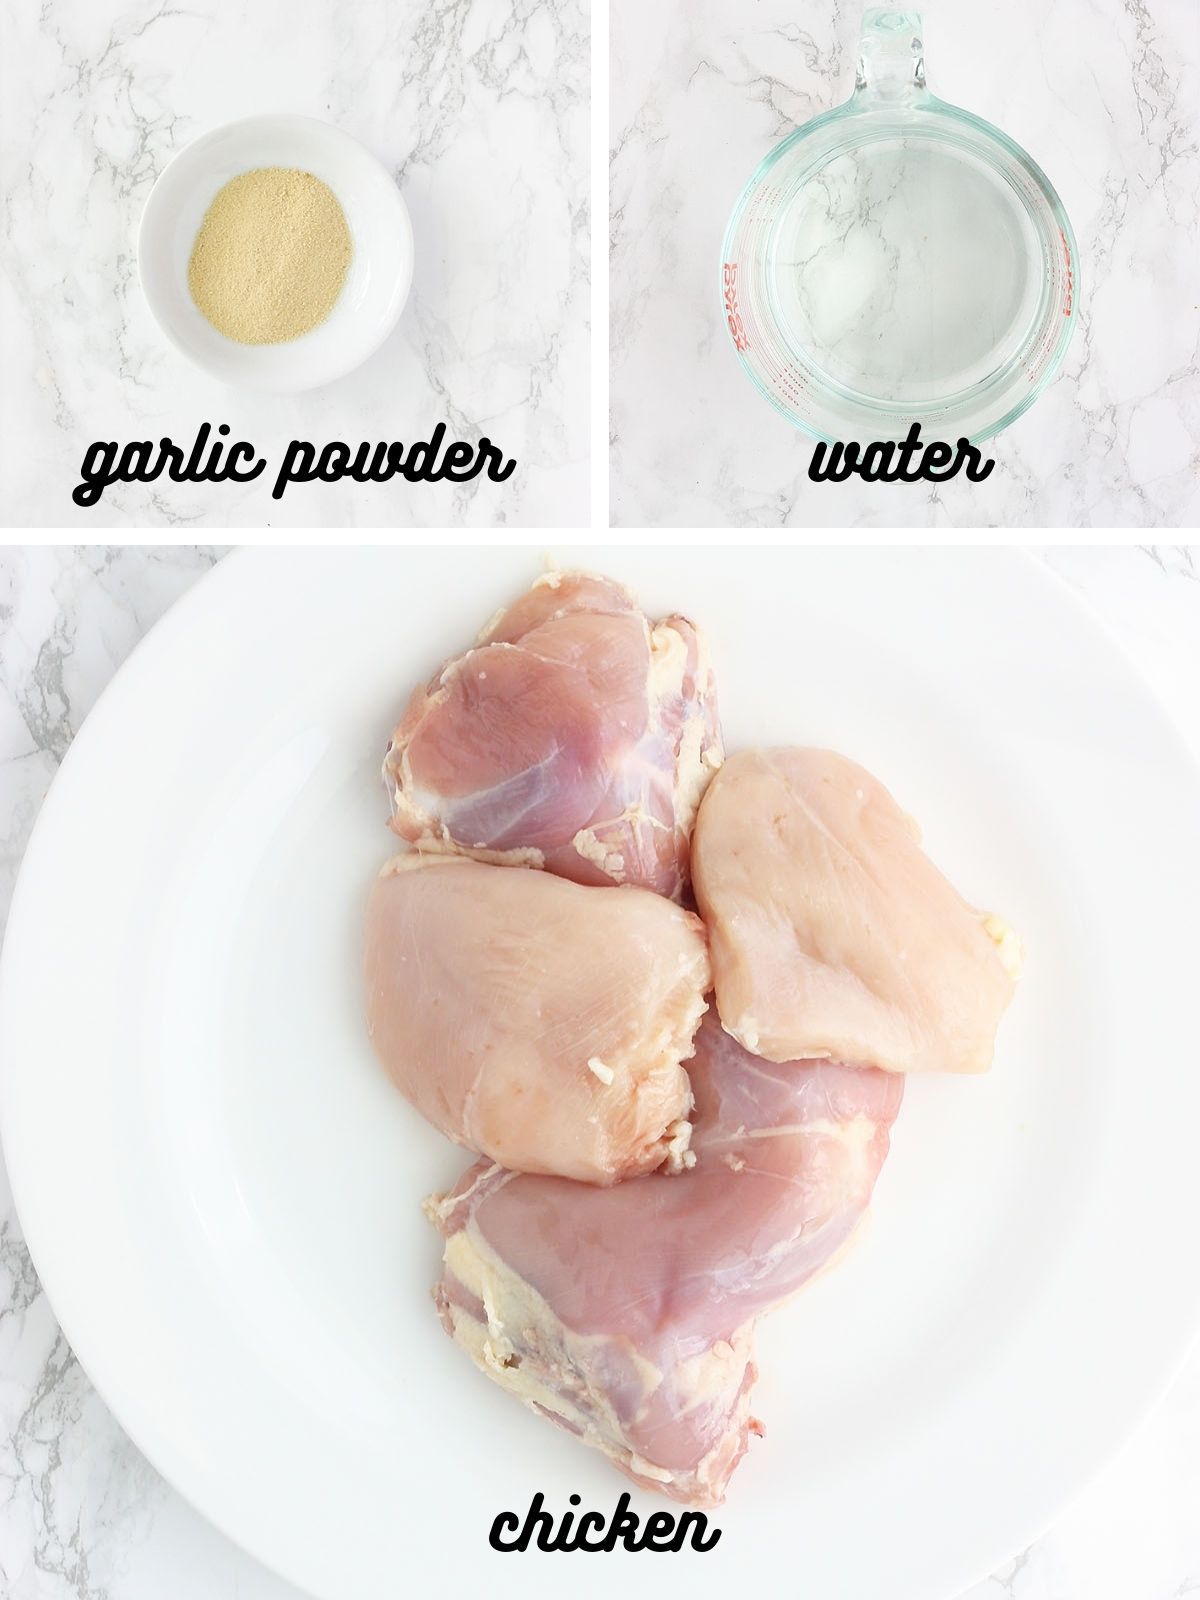 chicken and dumpling ingredients include garlic powder, water and chicken pieces